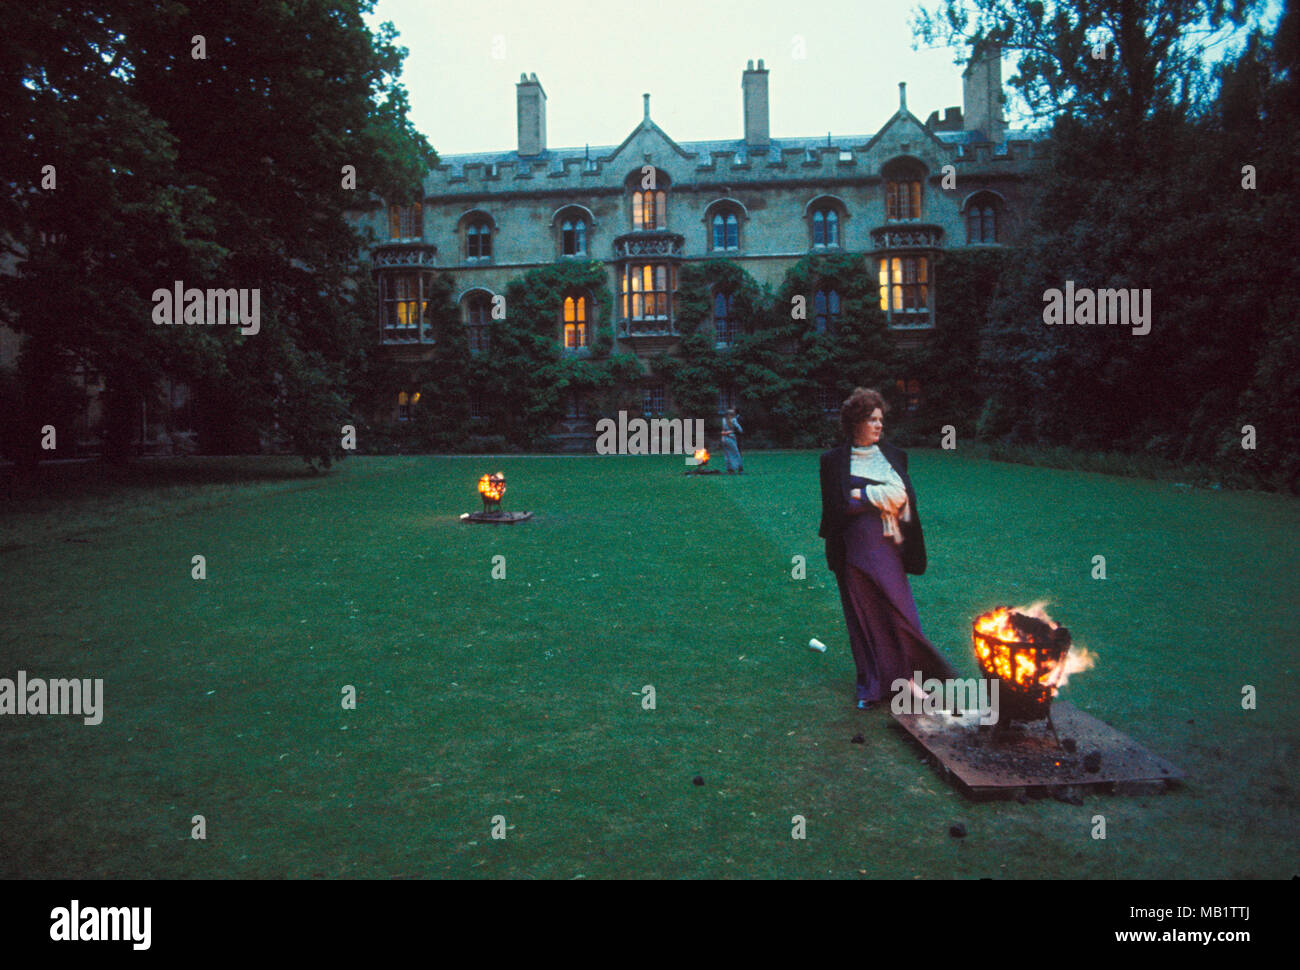 Dawn,May Ball. Trinity College Cambridge, 1971. Stock Photo